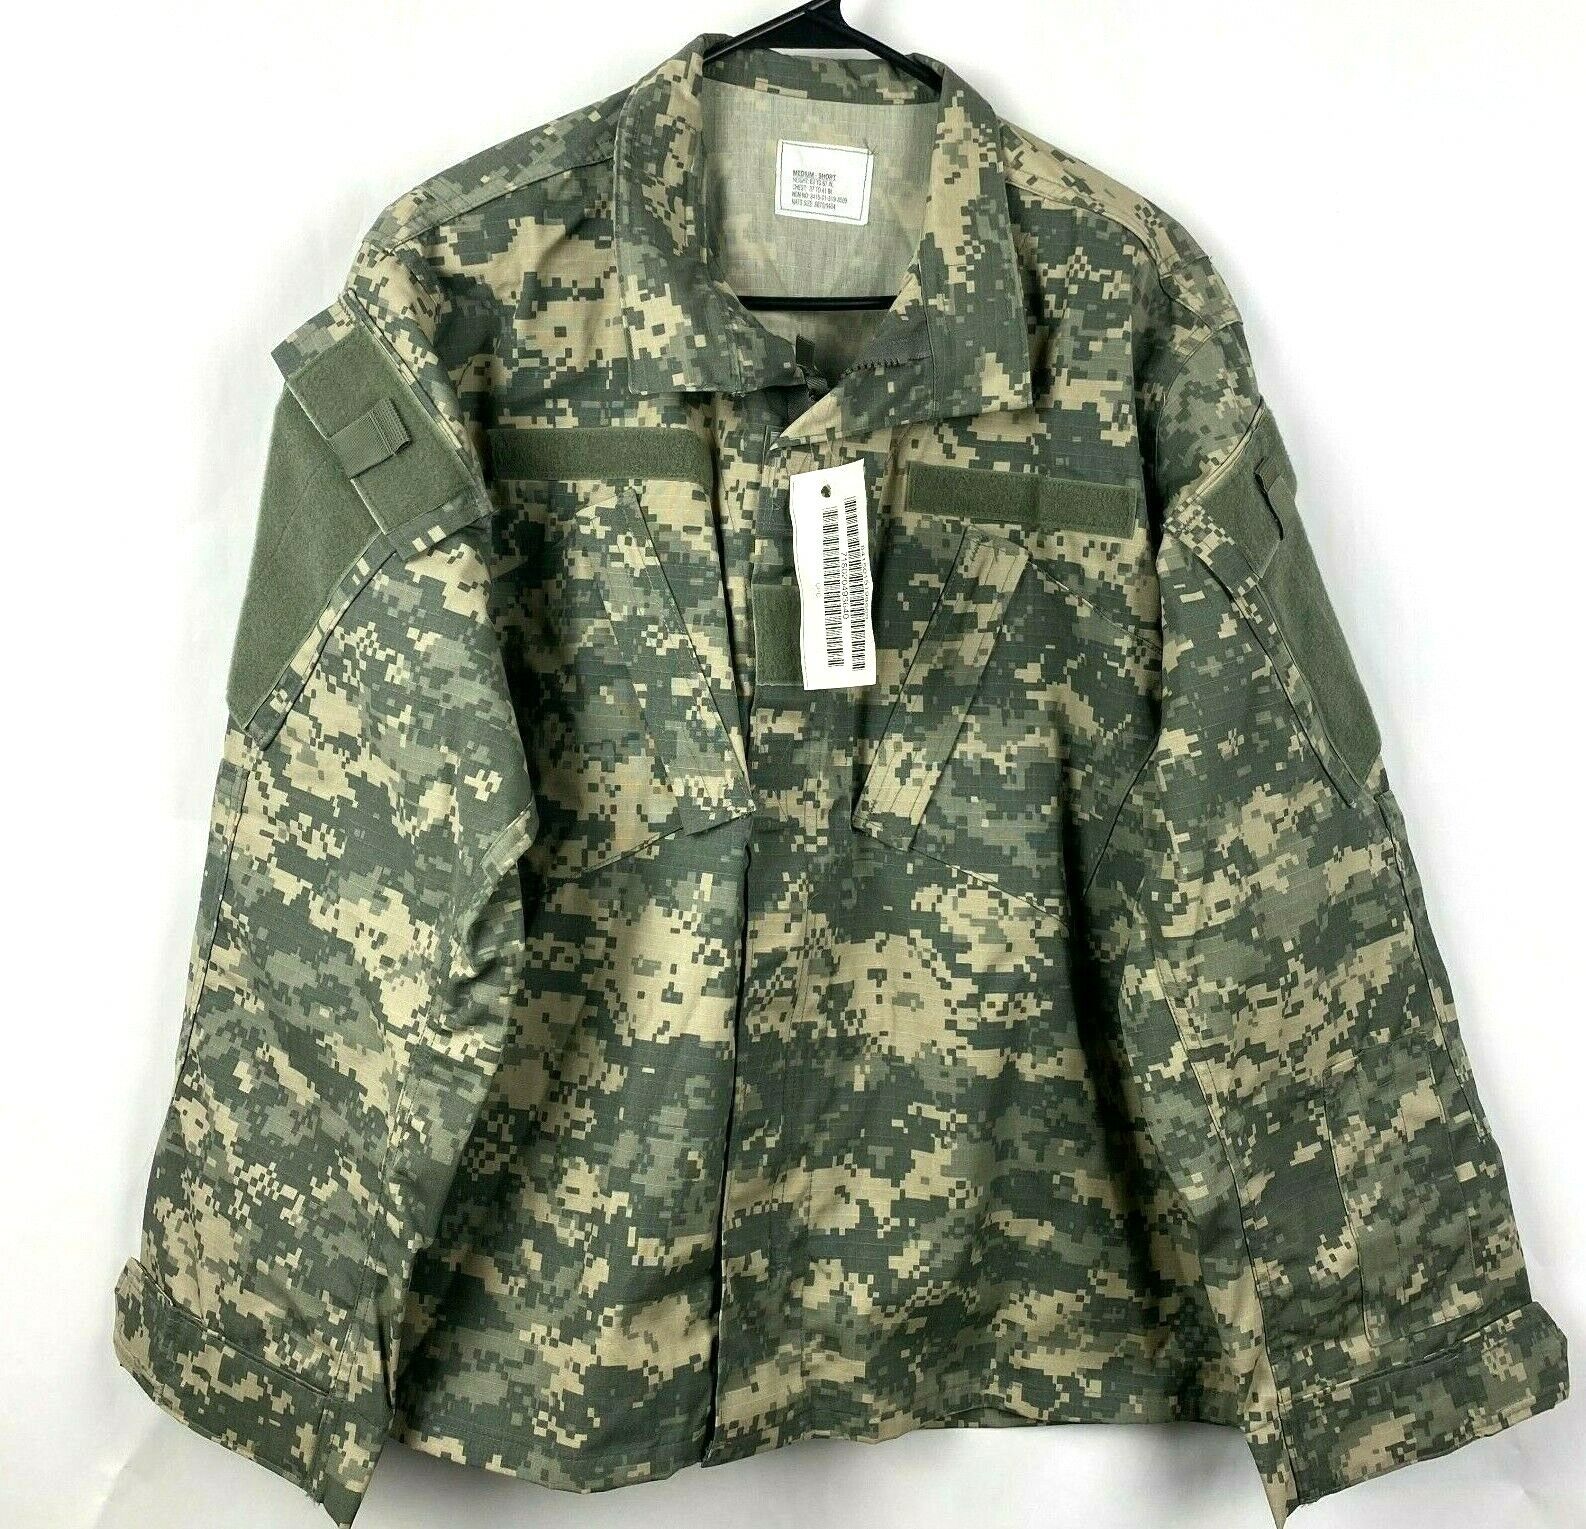 Military ACU Digital Camo Uniform Shirt Jacket SZ Medium Short New NWT Men's